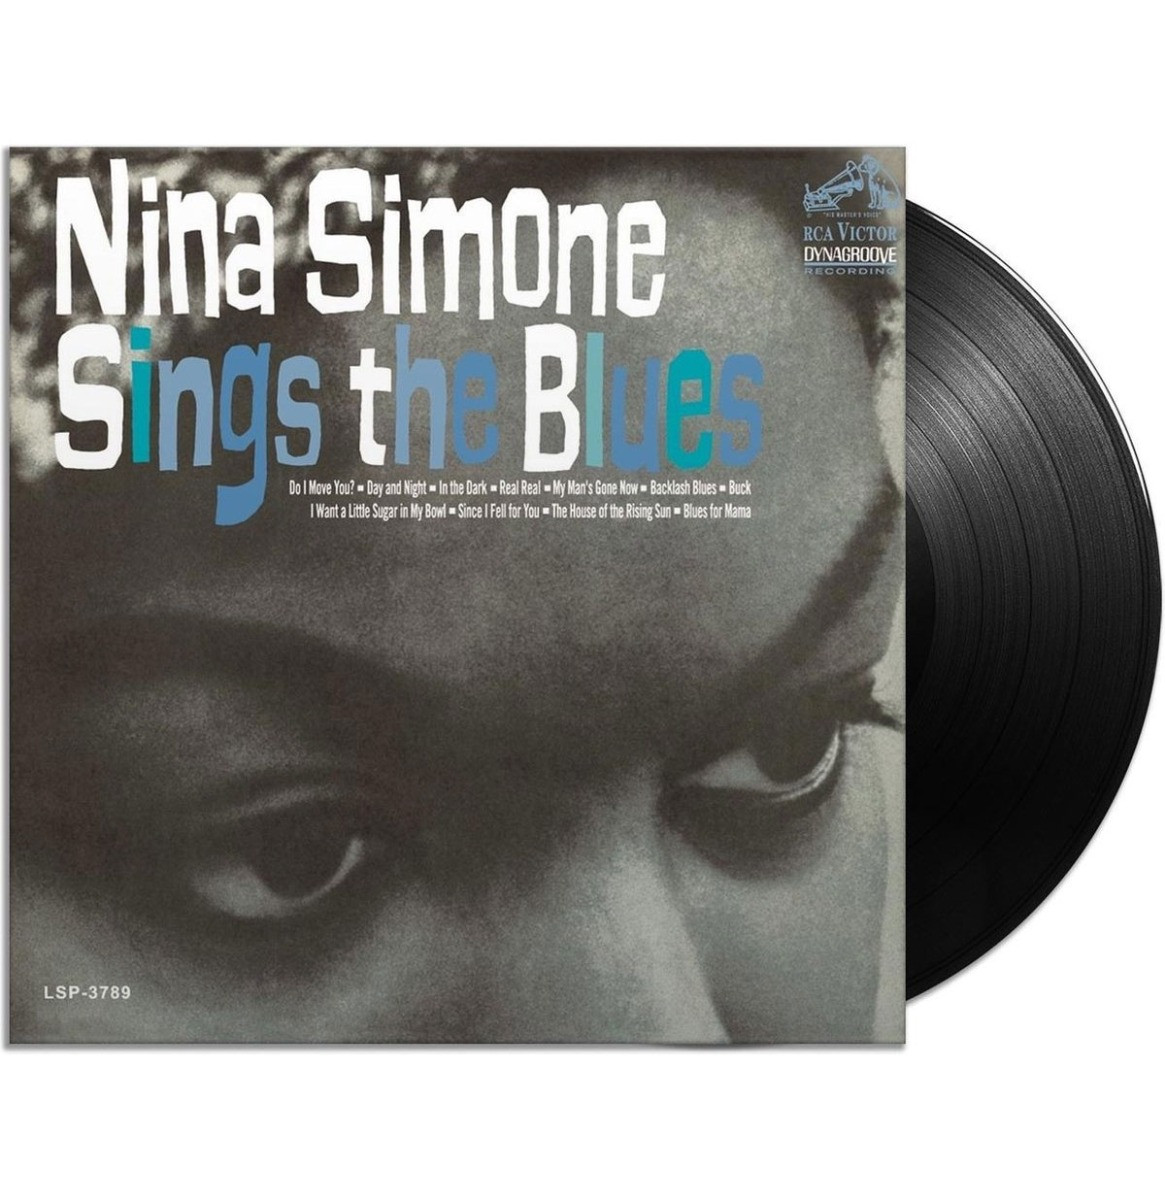 Nina Simone - Nina Simone Sings The Blues (Virgin Vinyl) LP